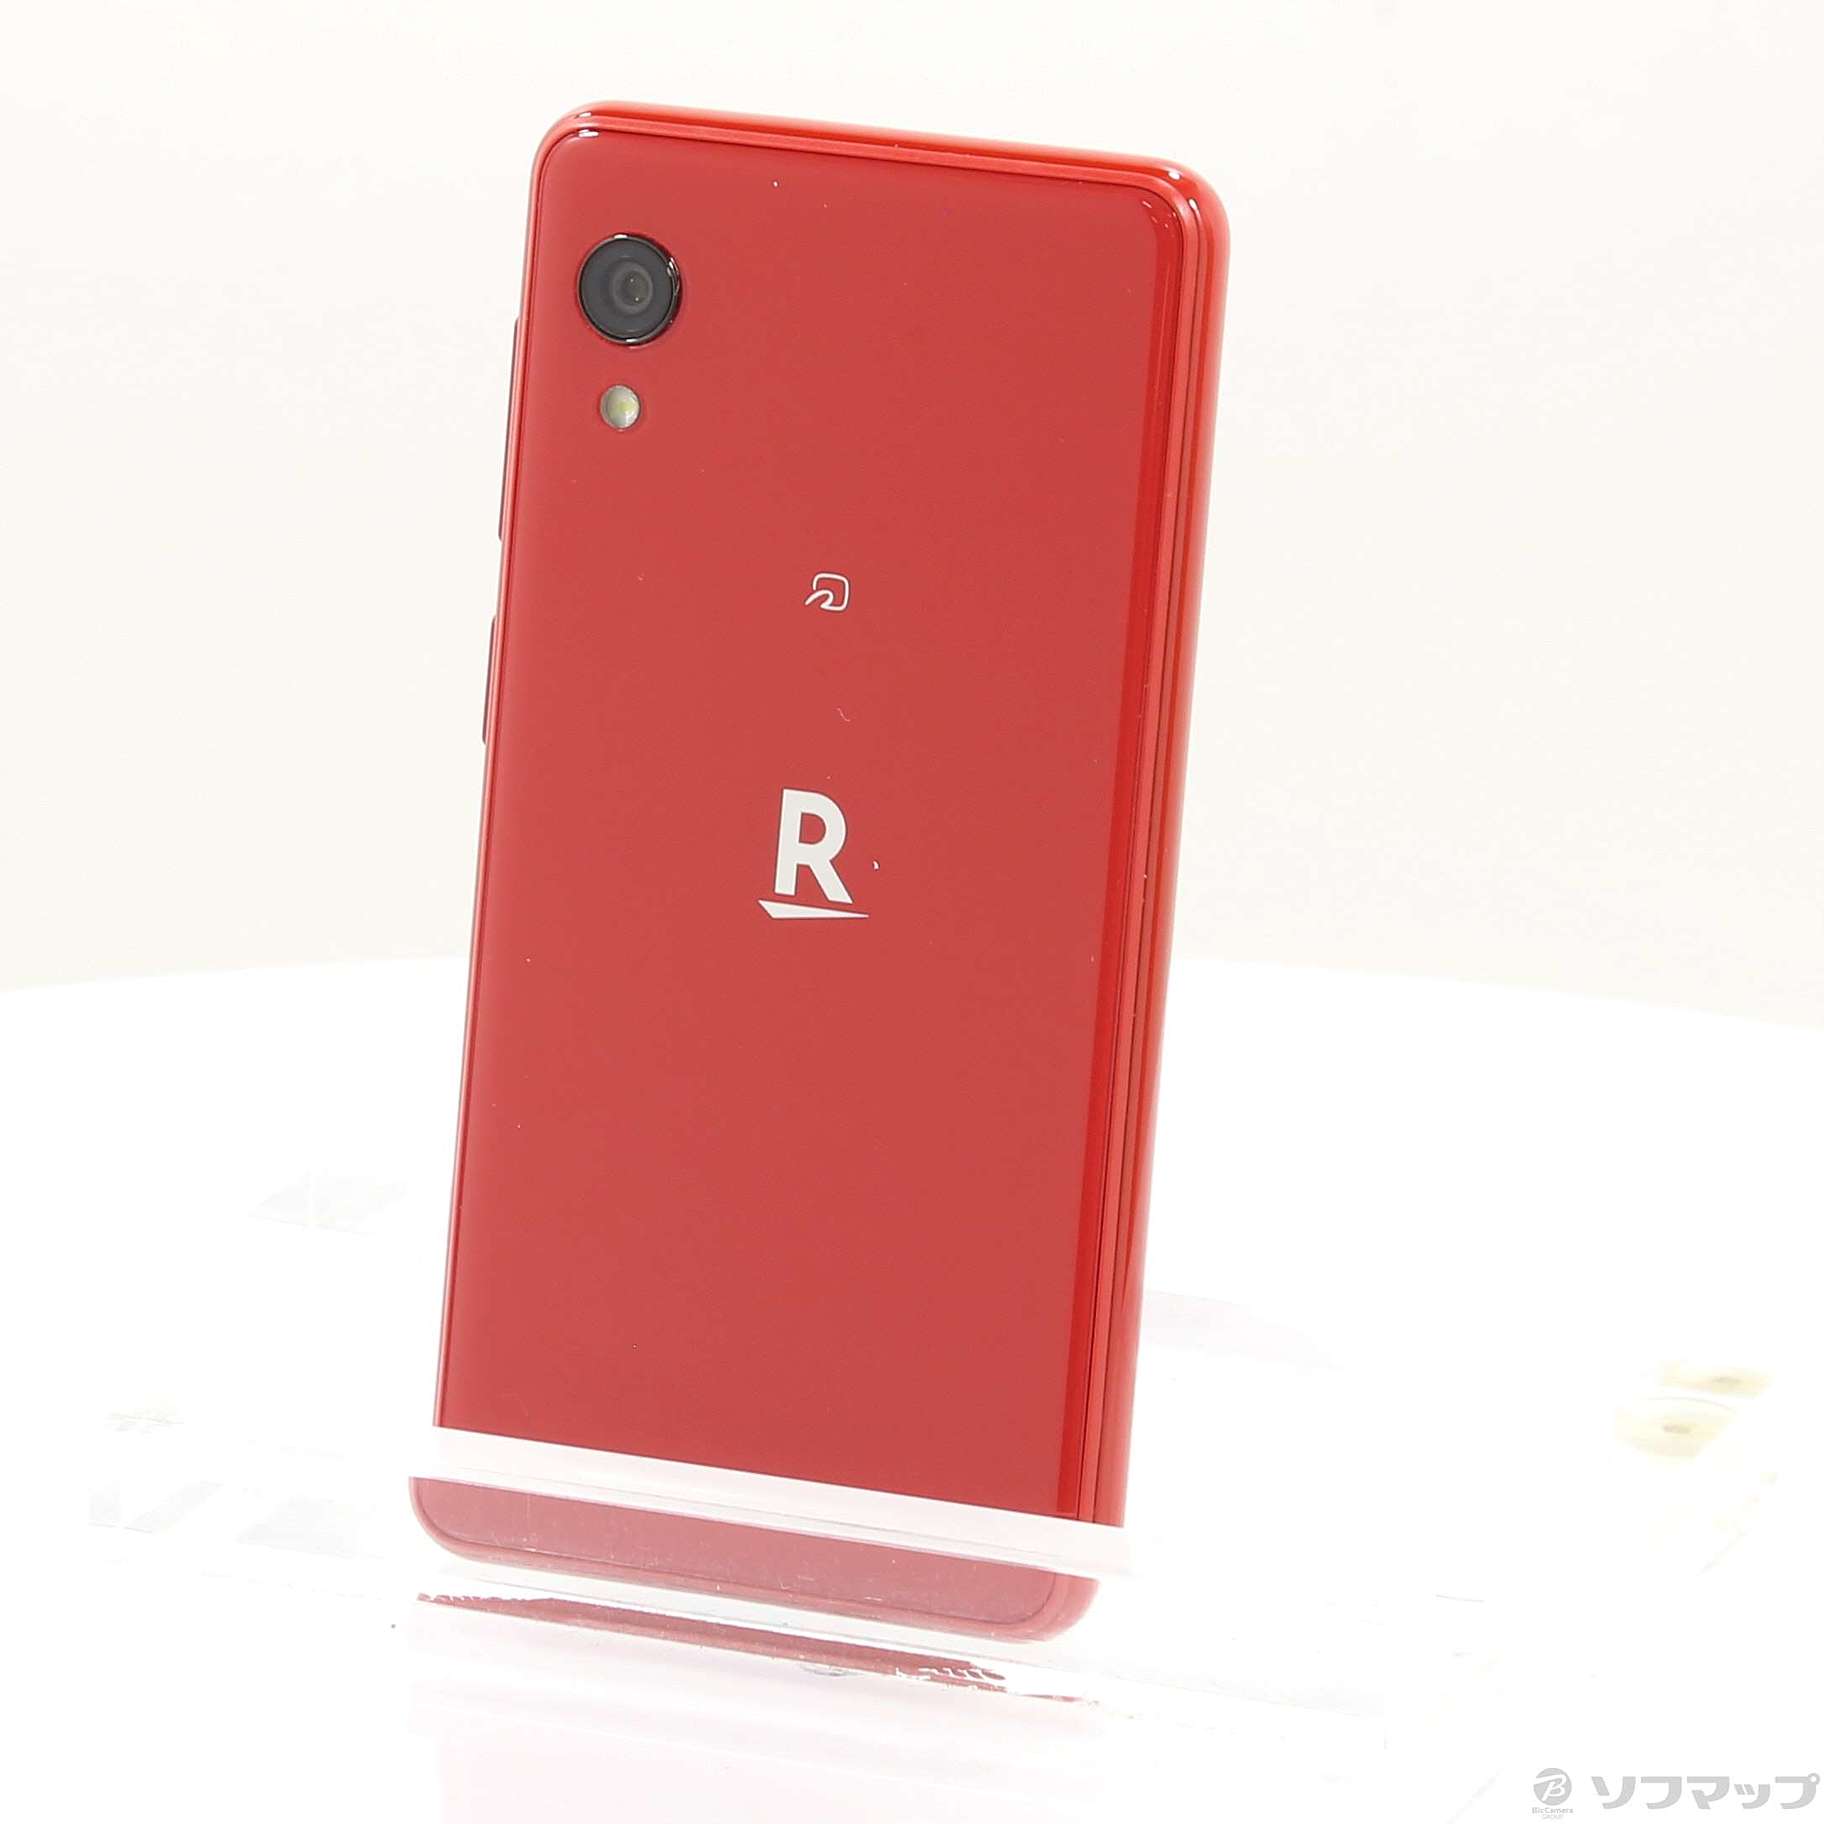 Rakuten Mini クリムゾンレッド 32 GB SIMフリー - 携帯電話